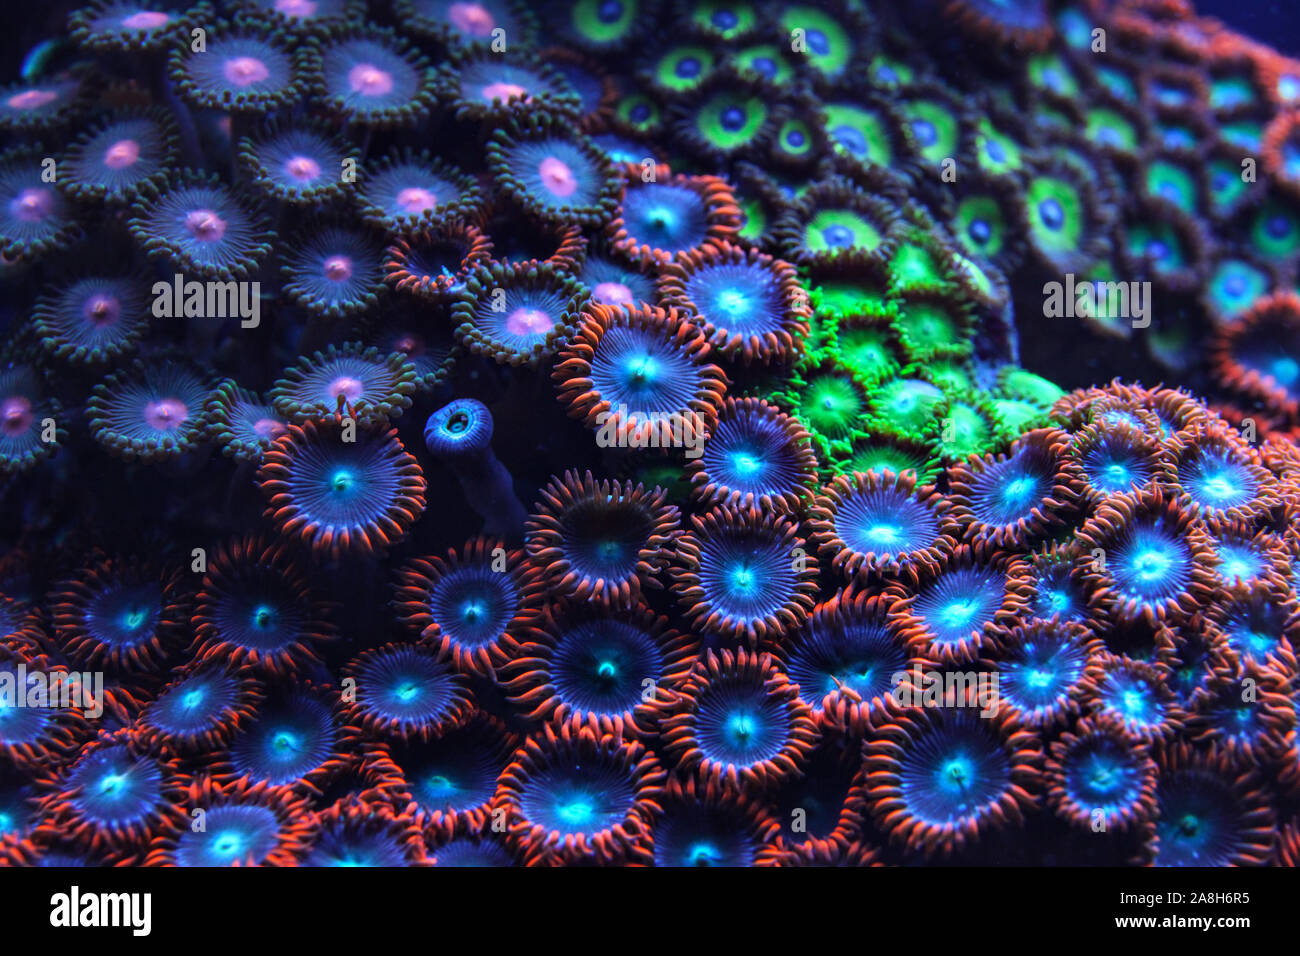 Purple and blue coral emitting light under UV underwater photo. Abstract organic marine background. Stock Photo